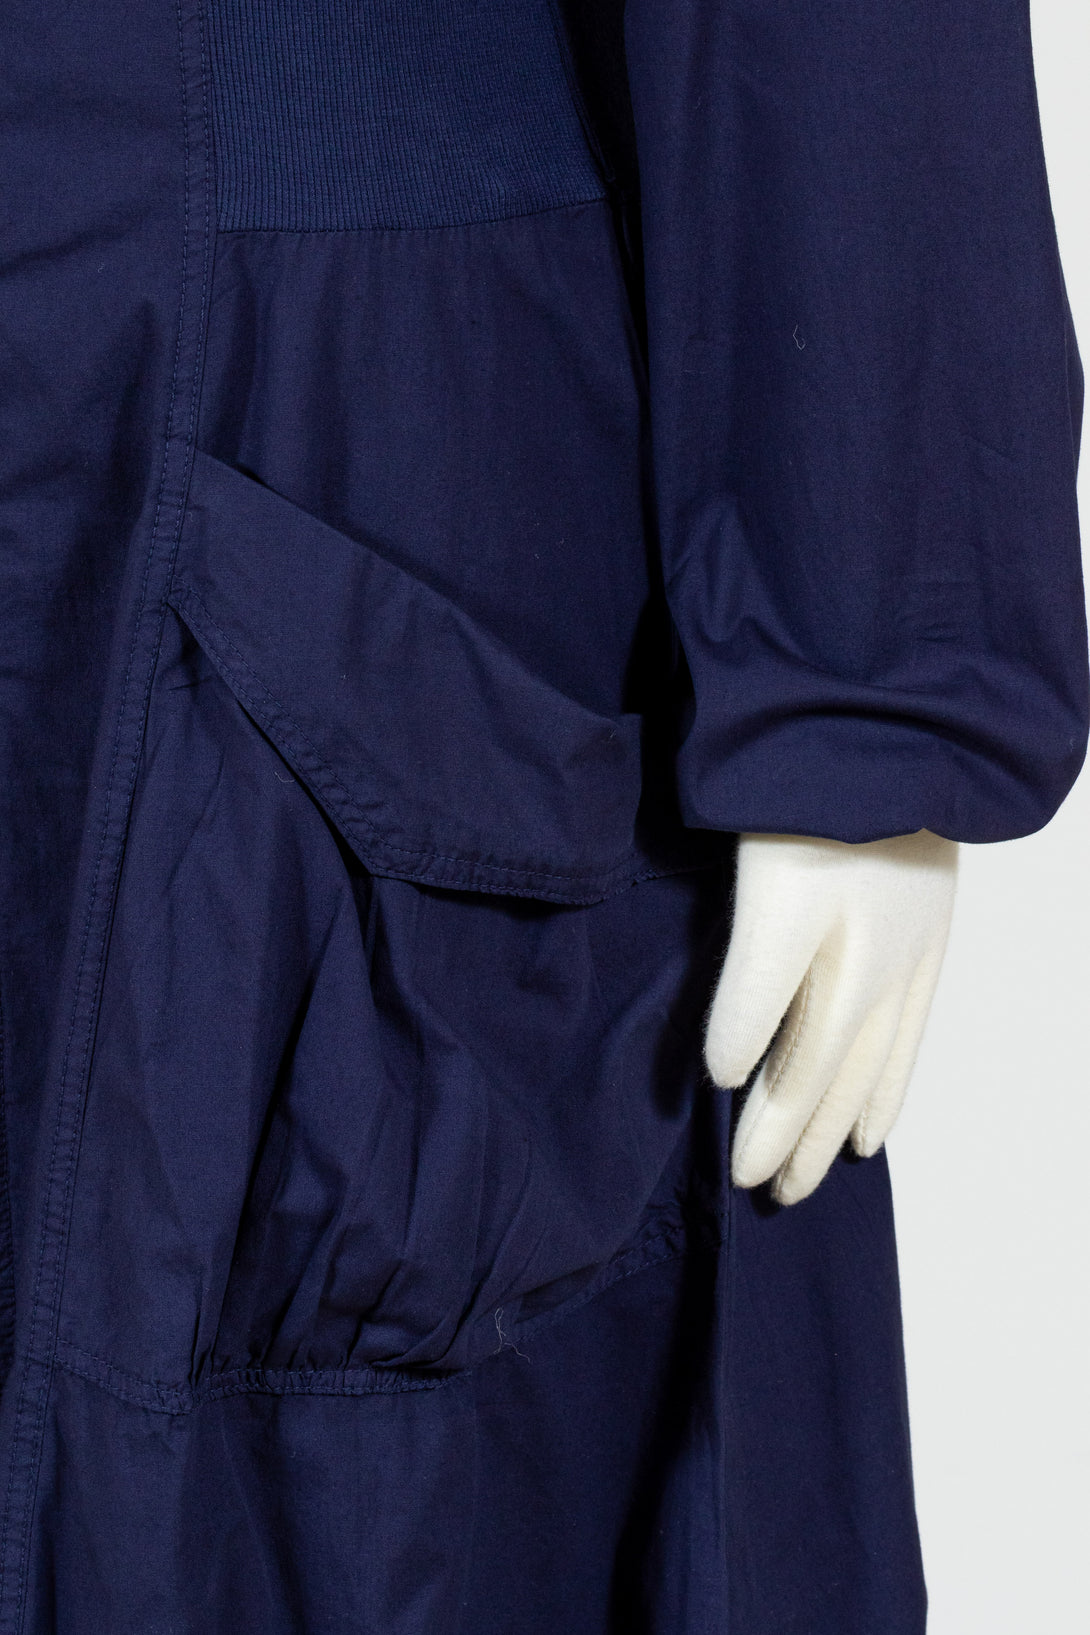 XCVI-Deschutes-Jacket-Dress-Navy-Blue